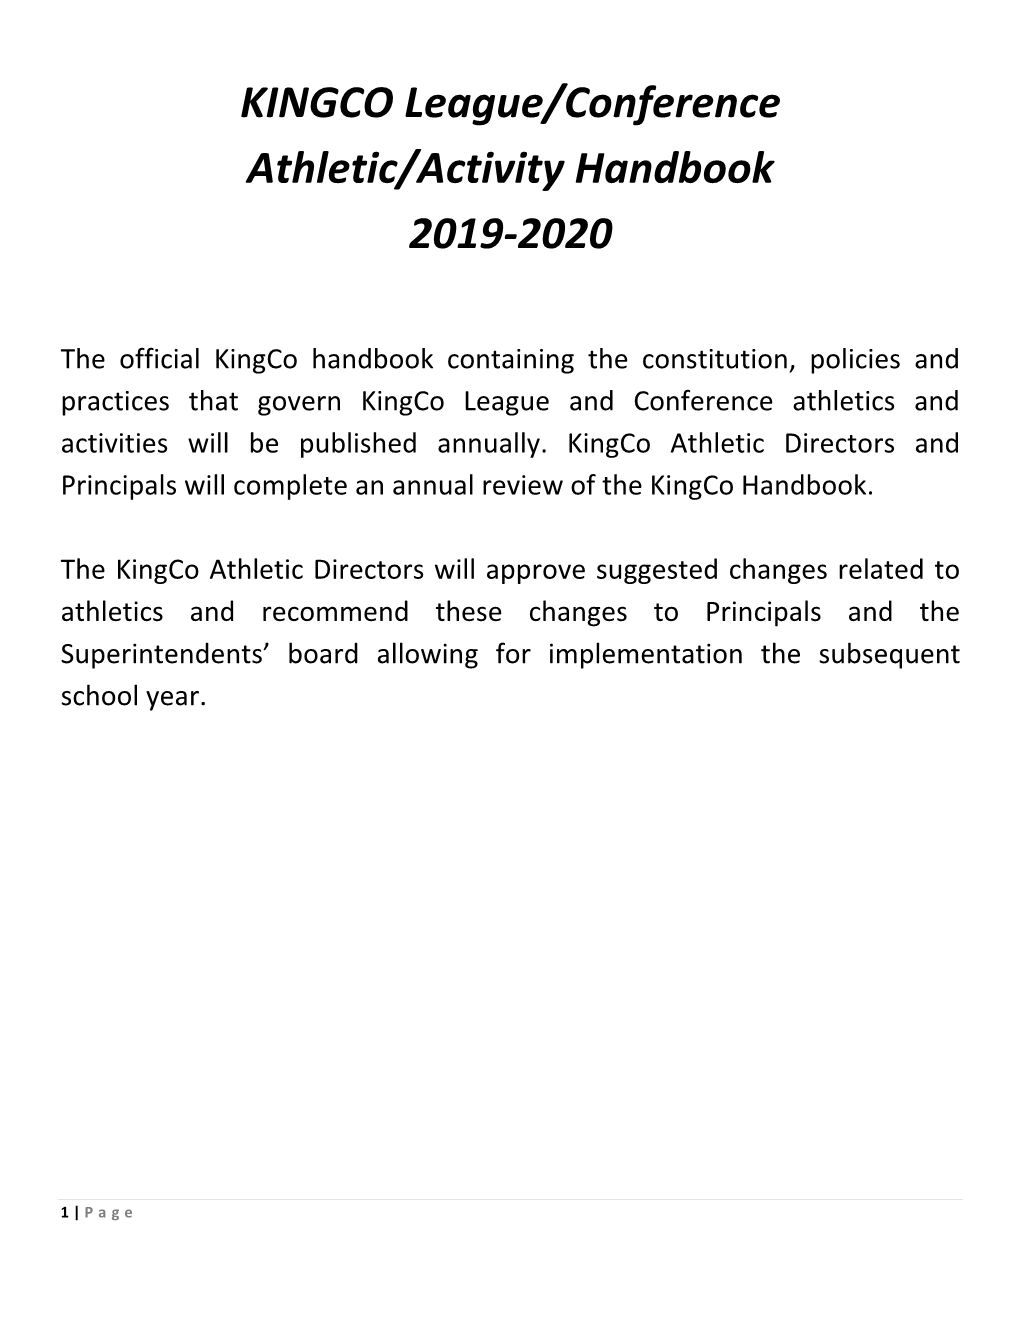 KINGCO League/Conference Athletic/Activity Handbook 2019-2020